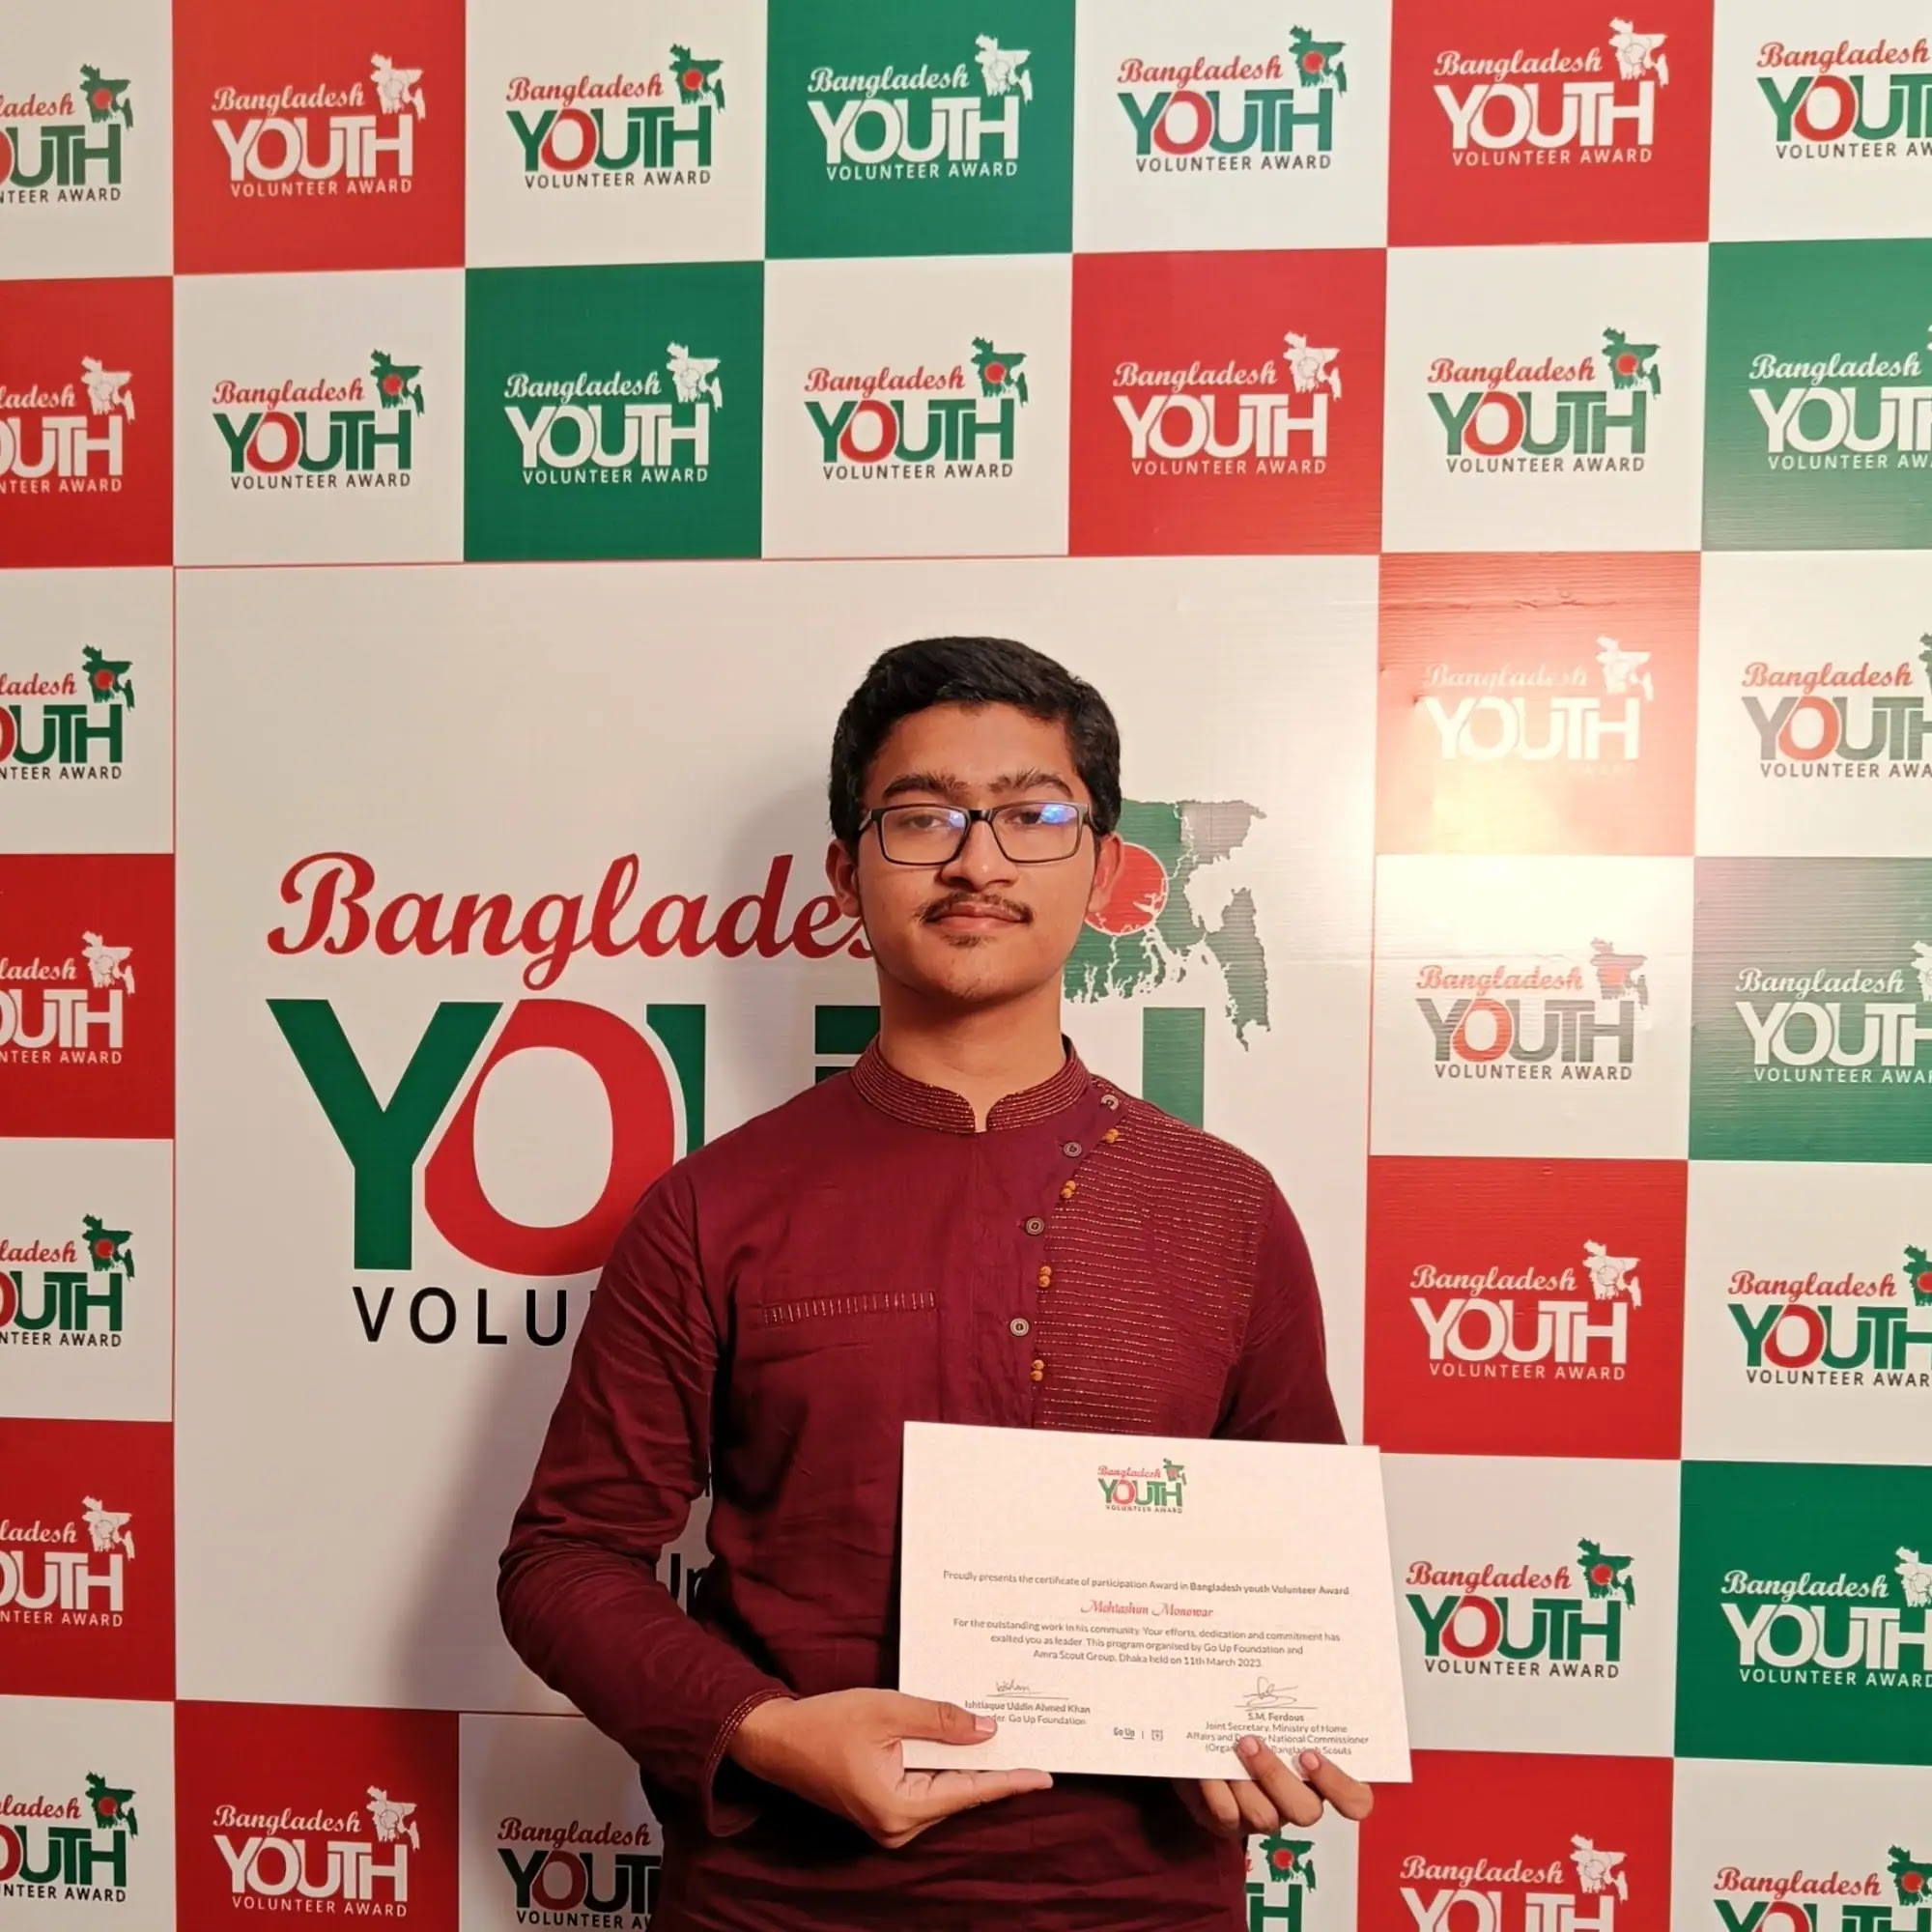 Youth volunteer award